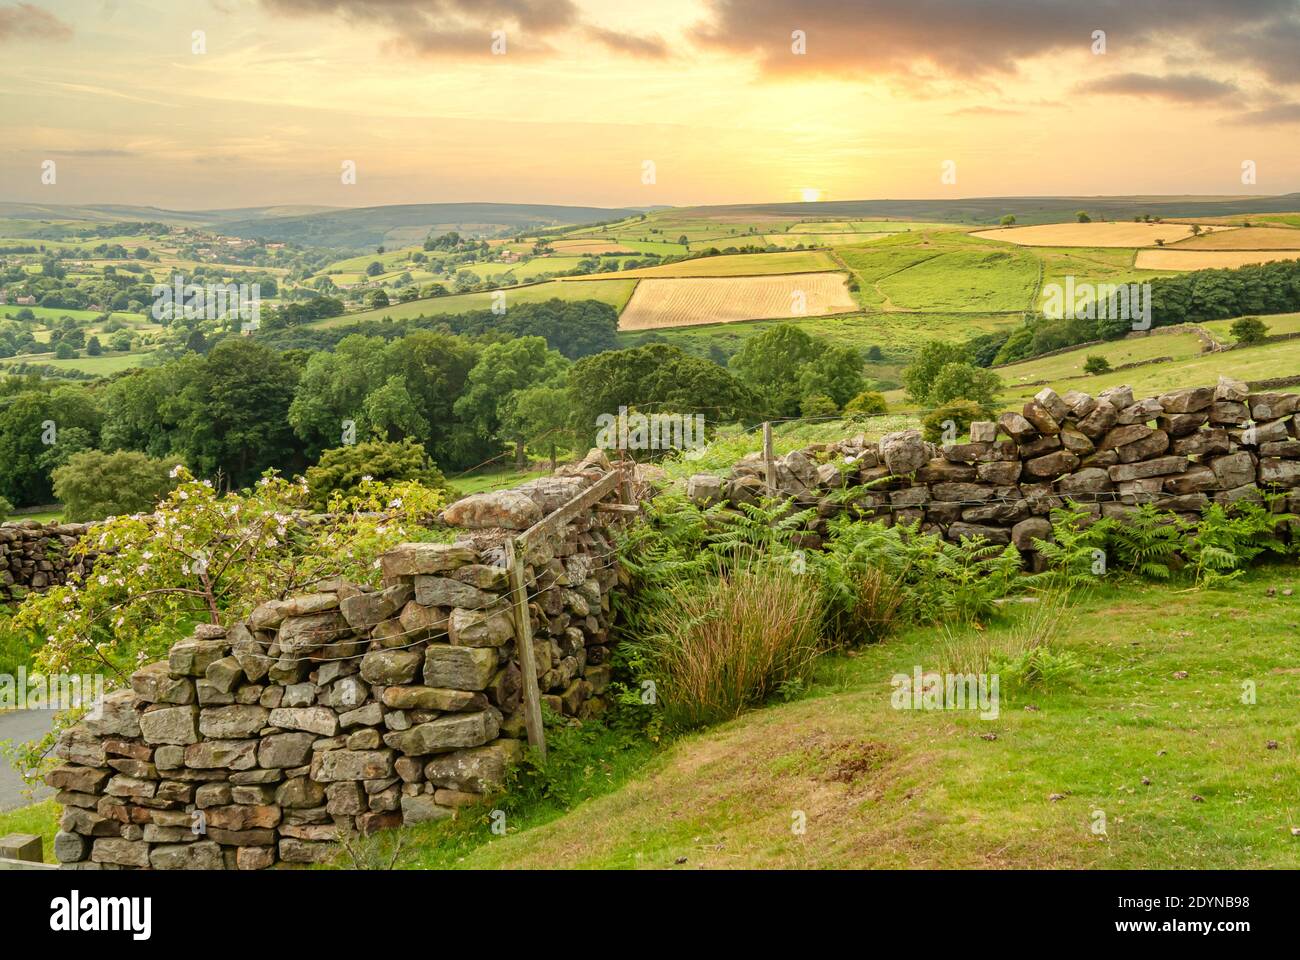 Dry stone wall at North York Moors or North Yorkshire Moors in North Yorkshire, England Stock Photo